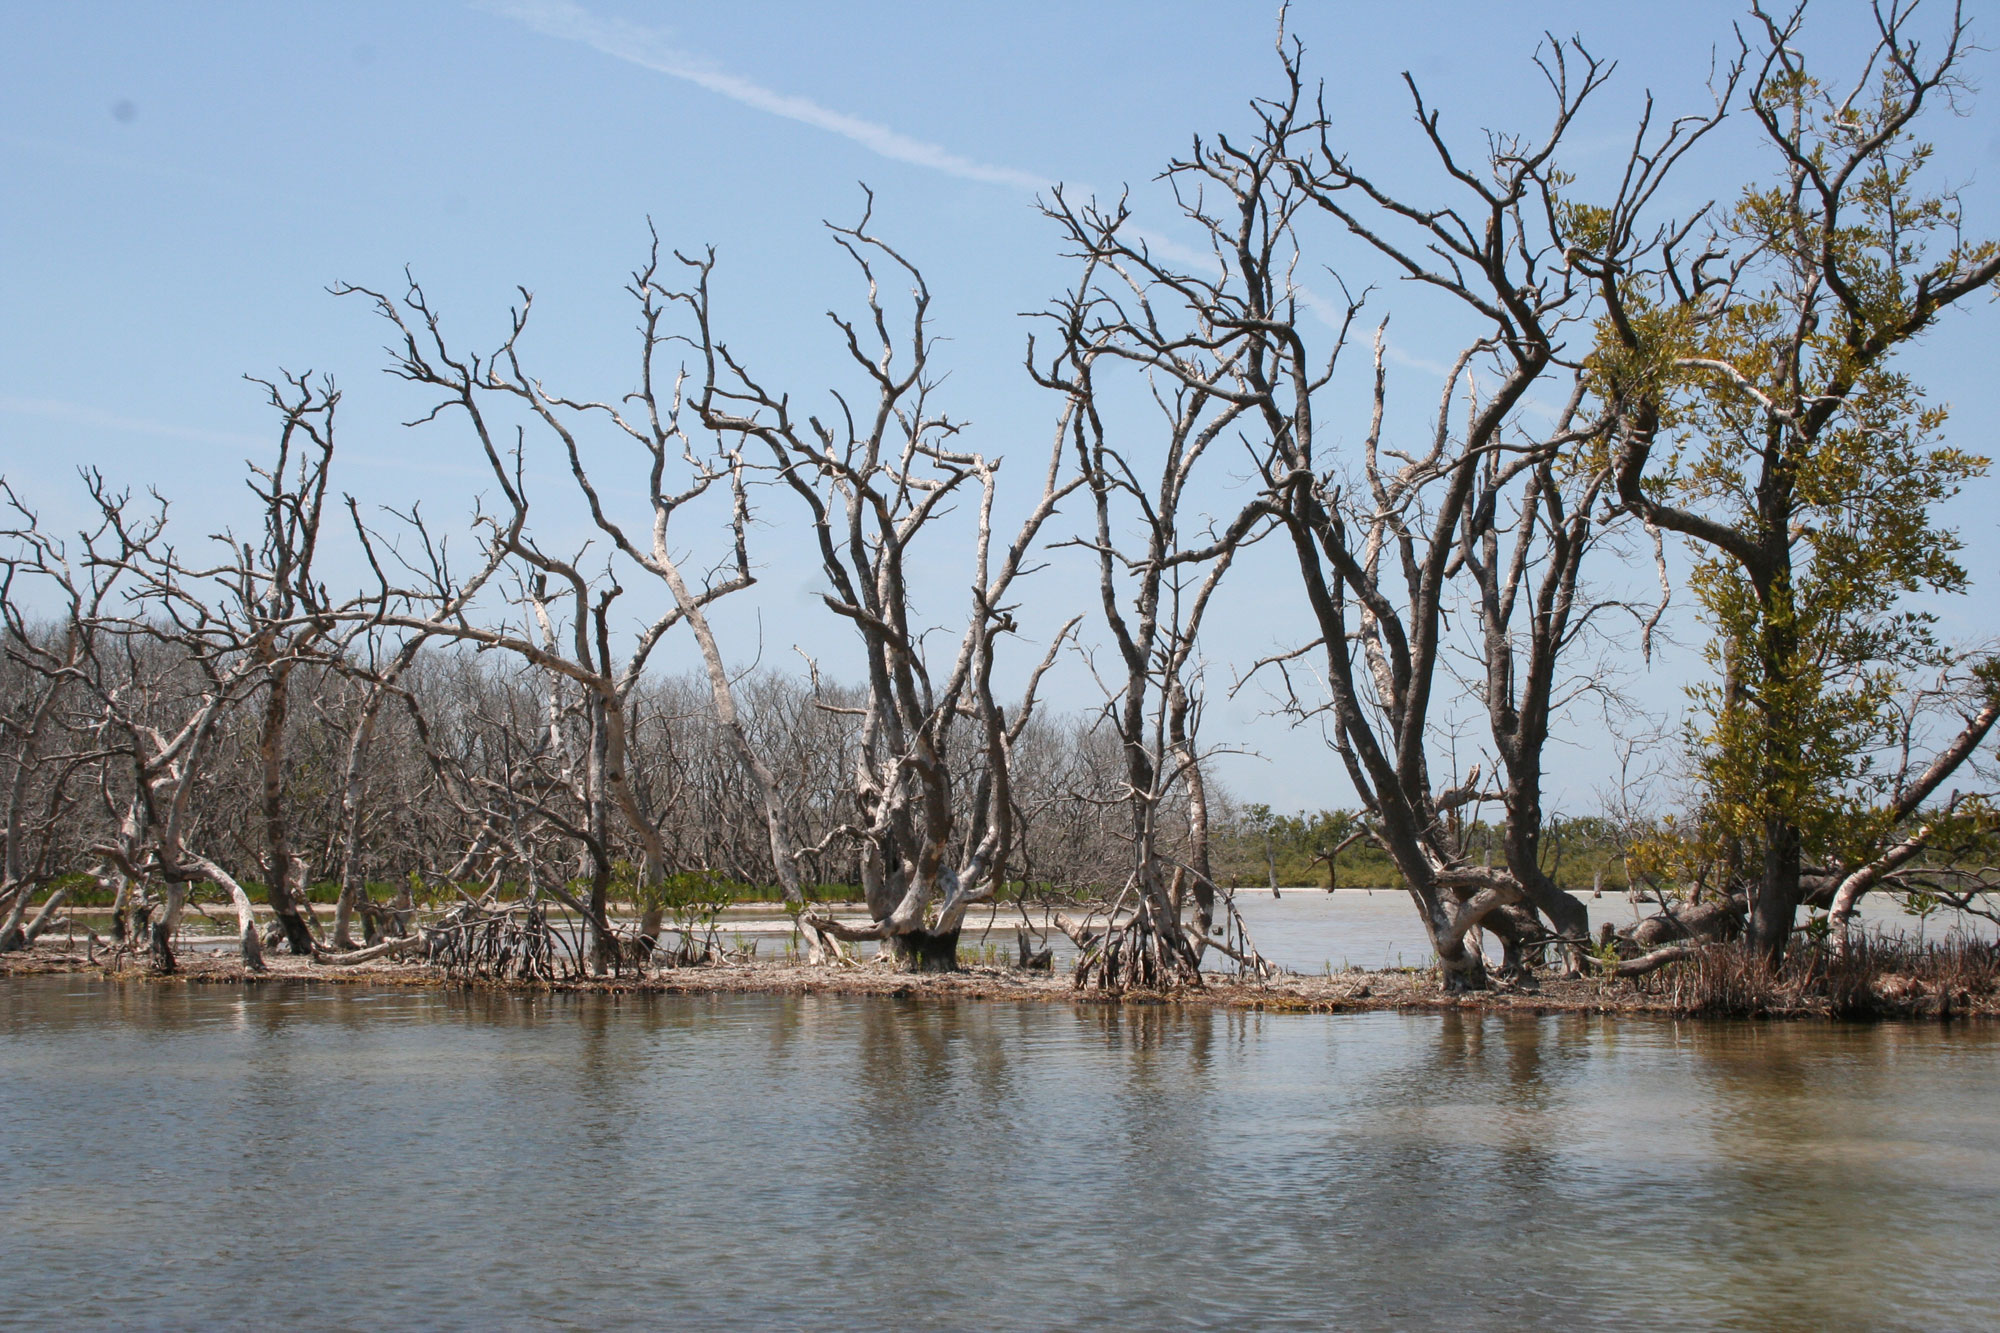 Photograph of dead mangroves on Jim Foot Key, Florida Bay, April 2019.